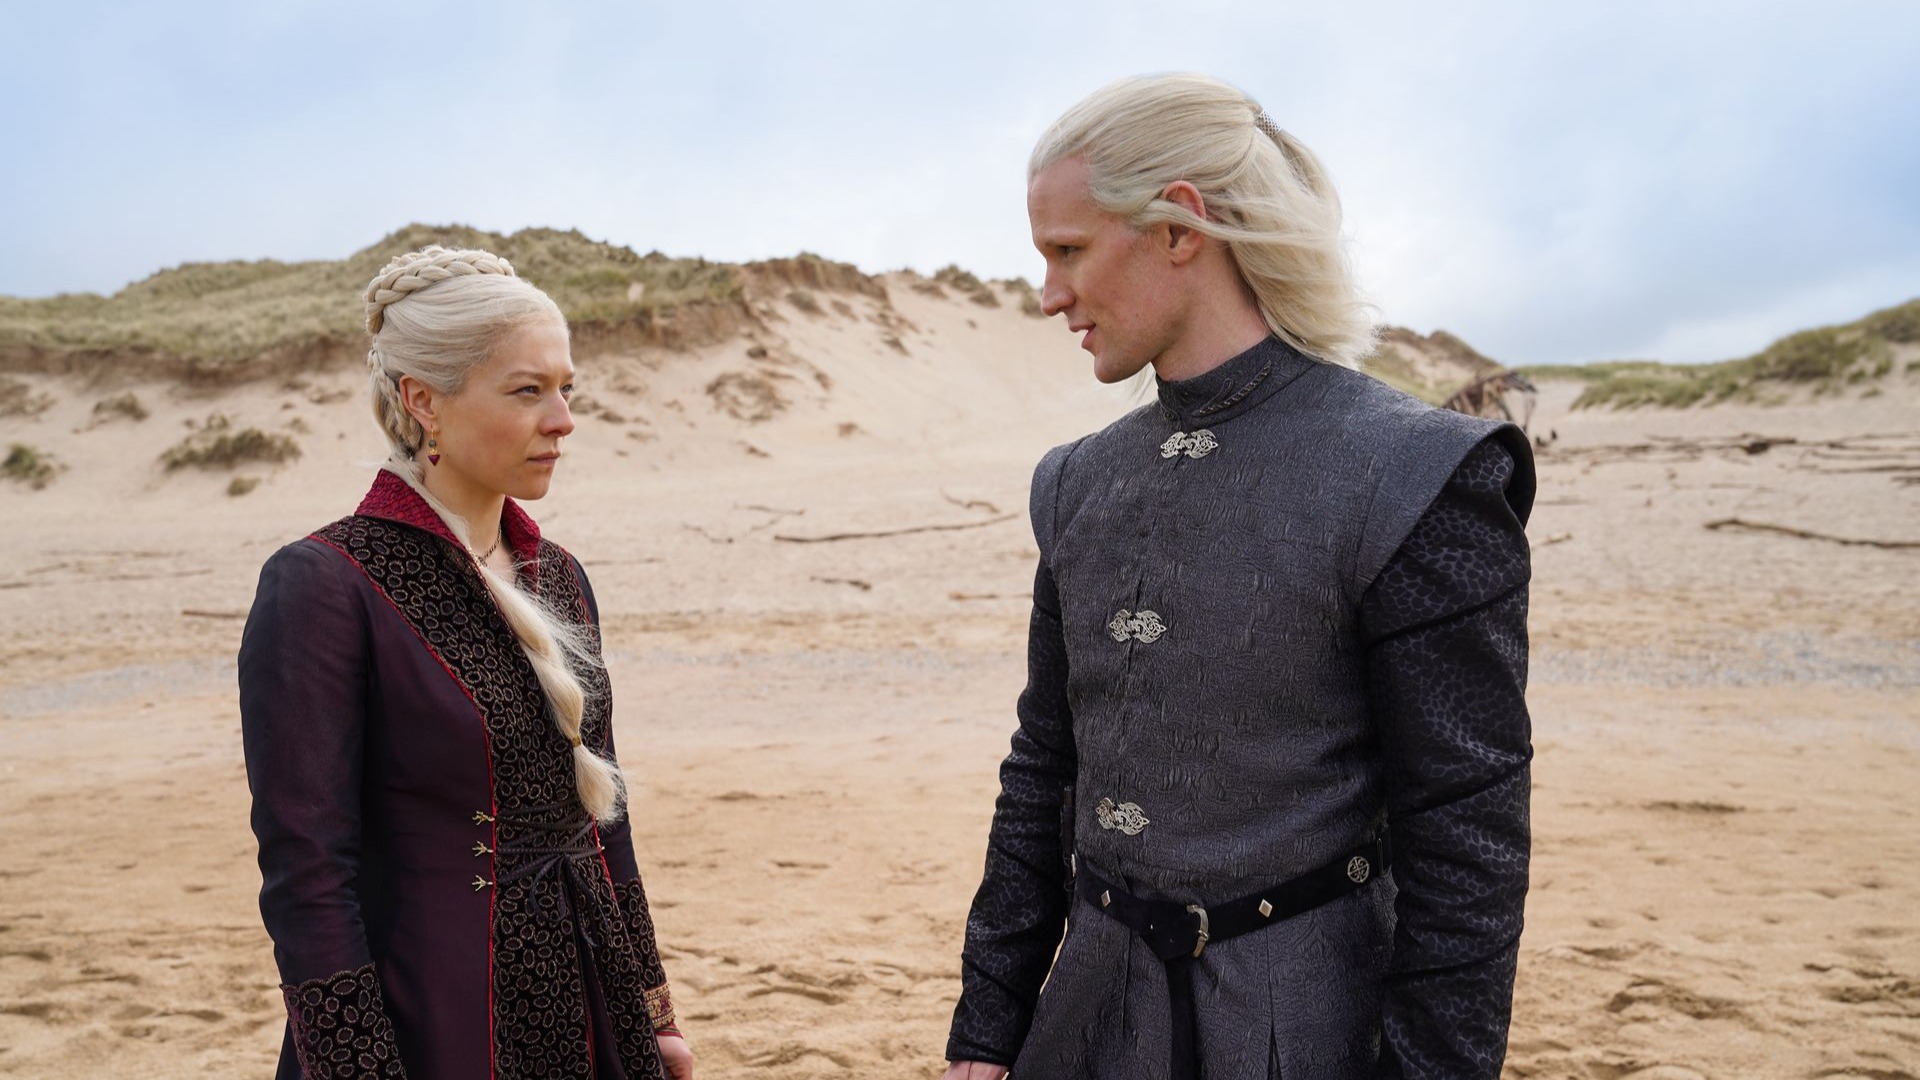 Rhaenyra and Daemon Targaryen Talk on a Beach in House of the Dragon on HBO Max